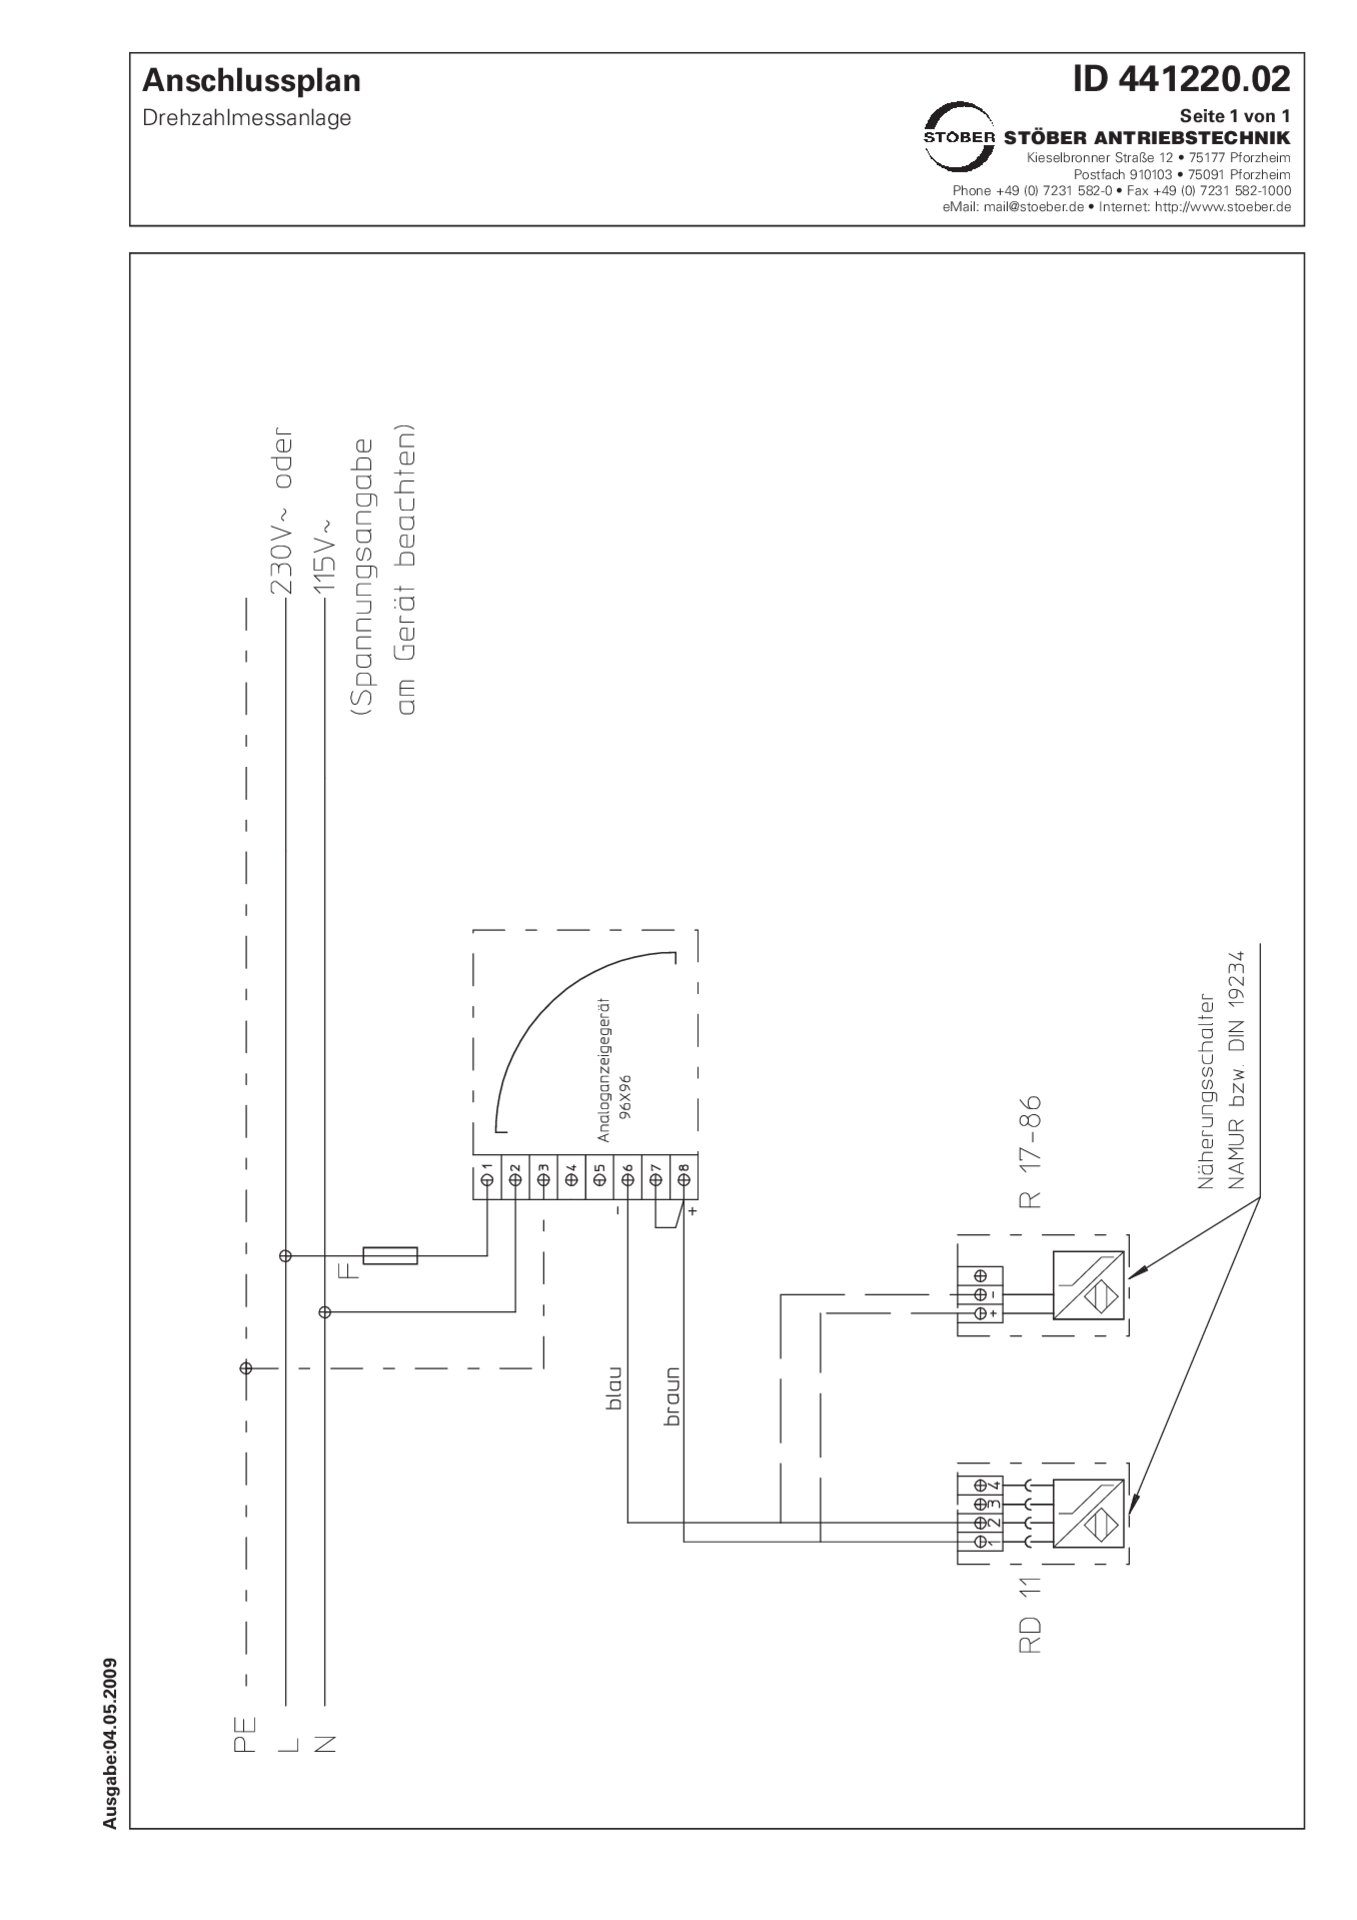 Connection plan Speed measuring system 115/230 V